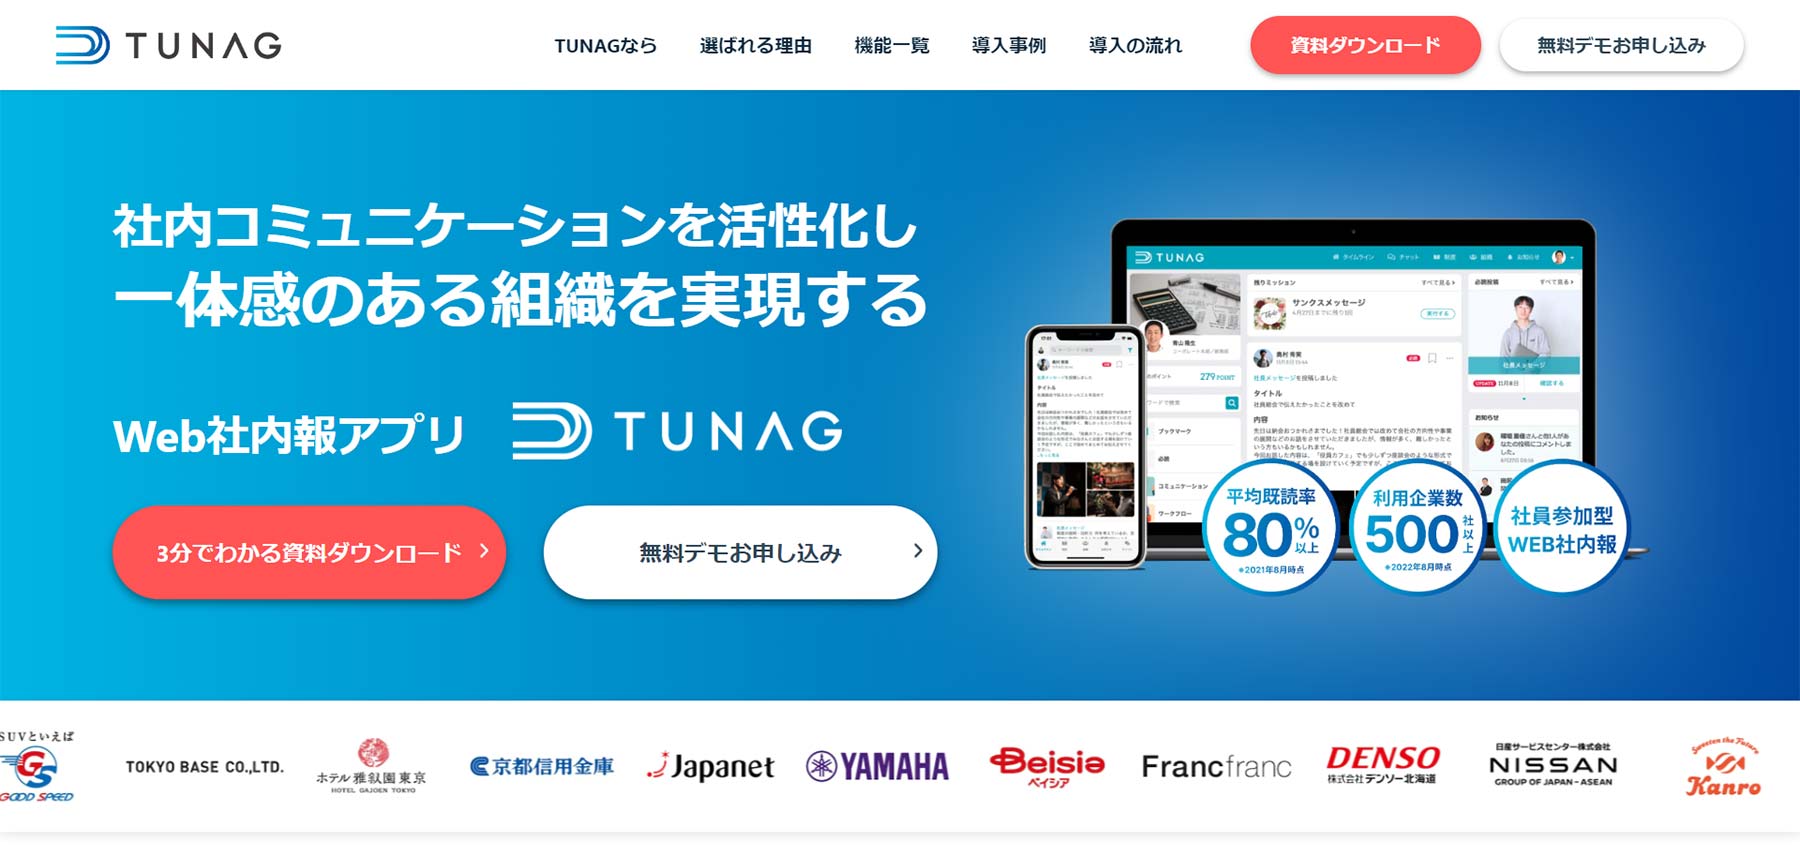 TUNAG公式Webサイト